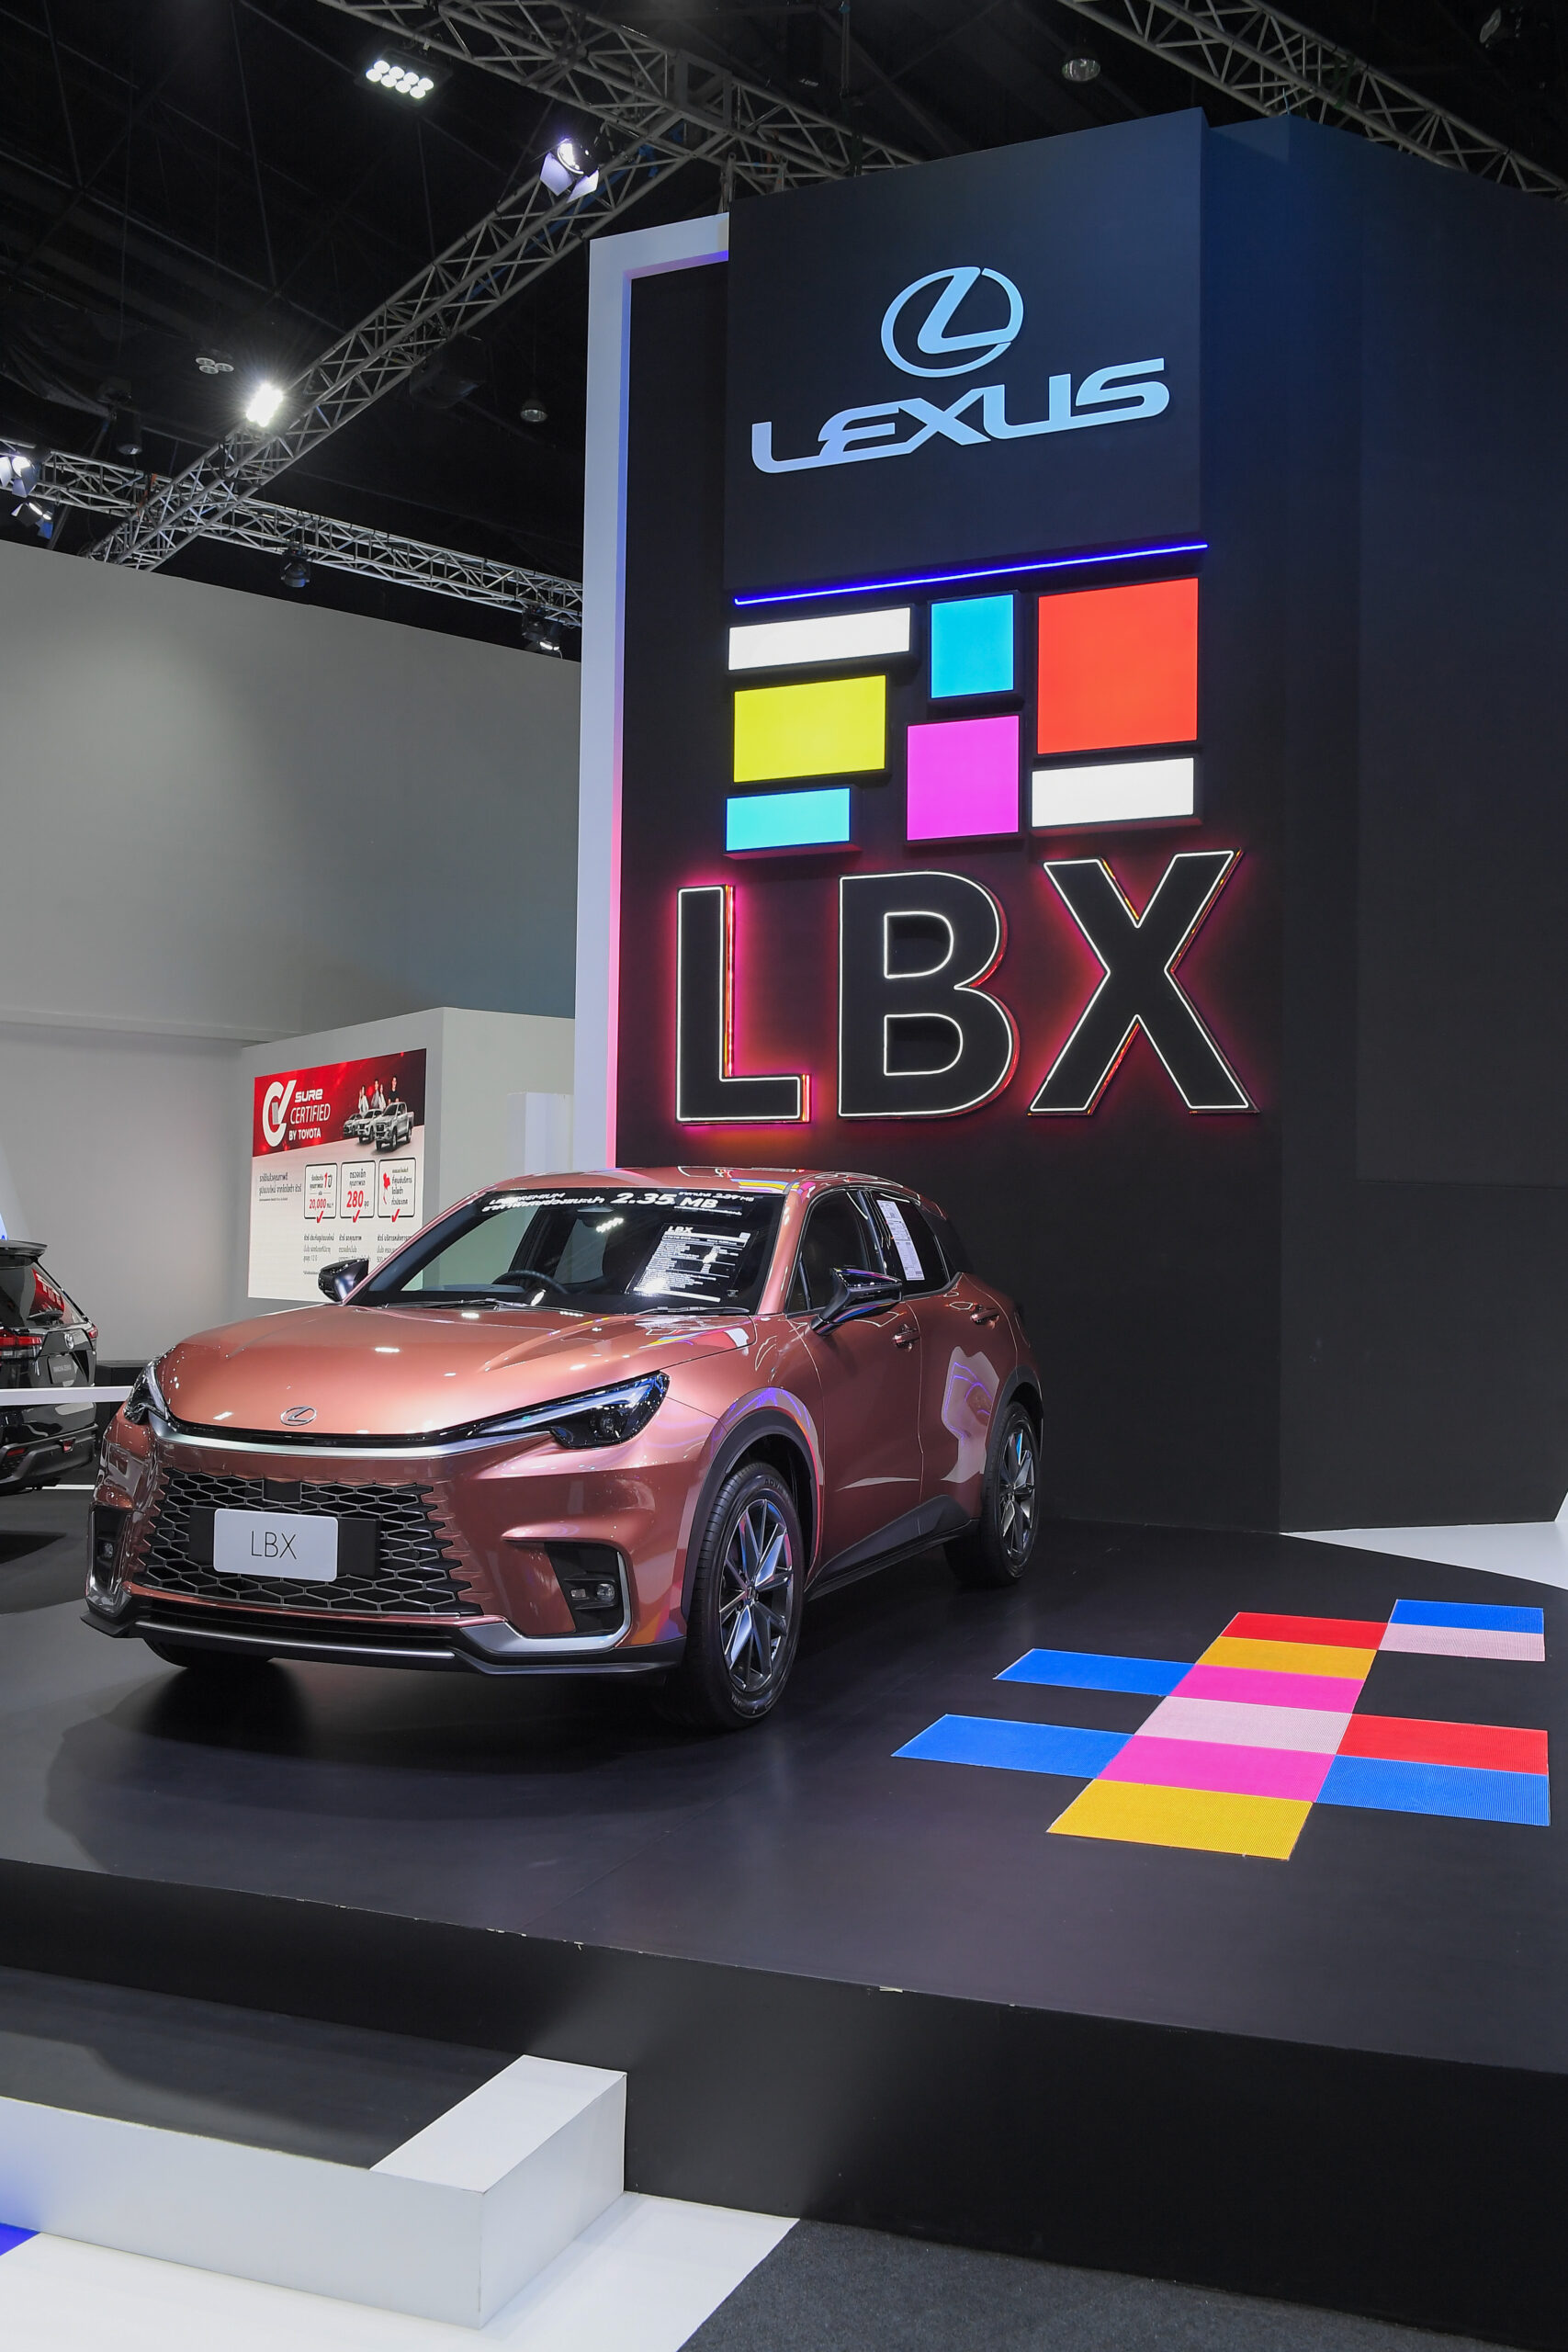  The All-New Lexus LBX